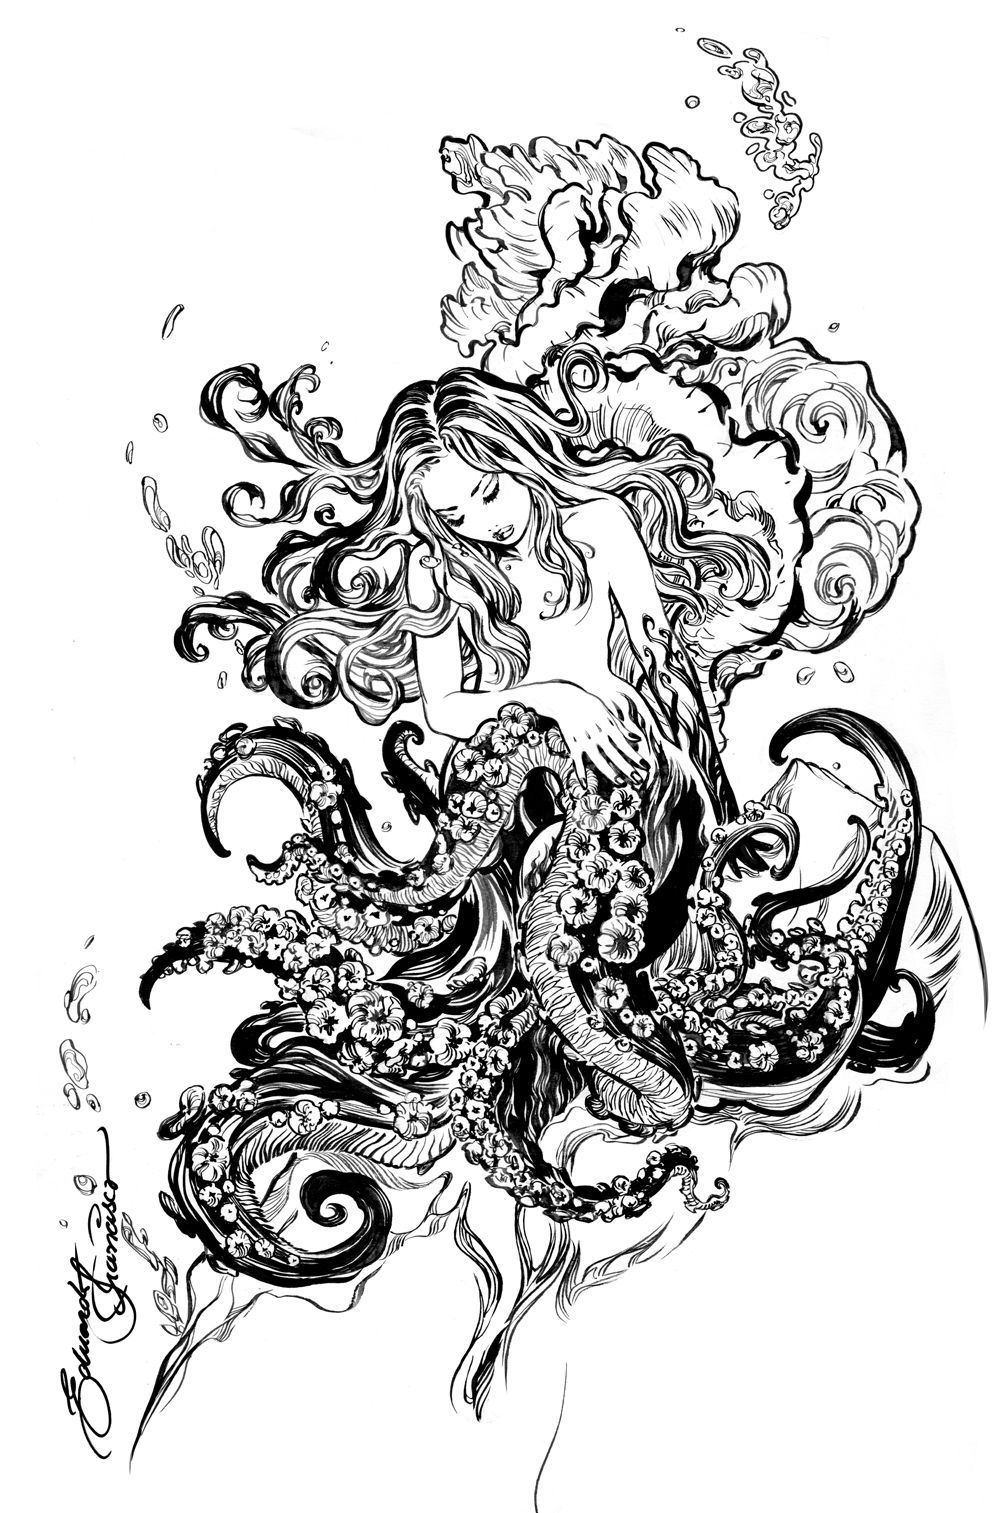 Seashell octopus woman tattoo inspiration